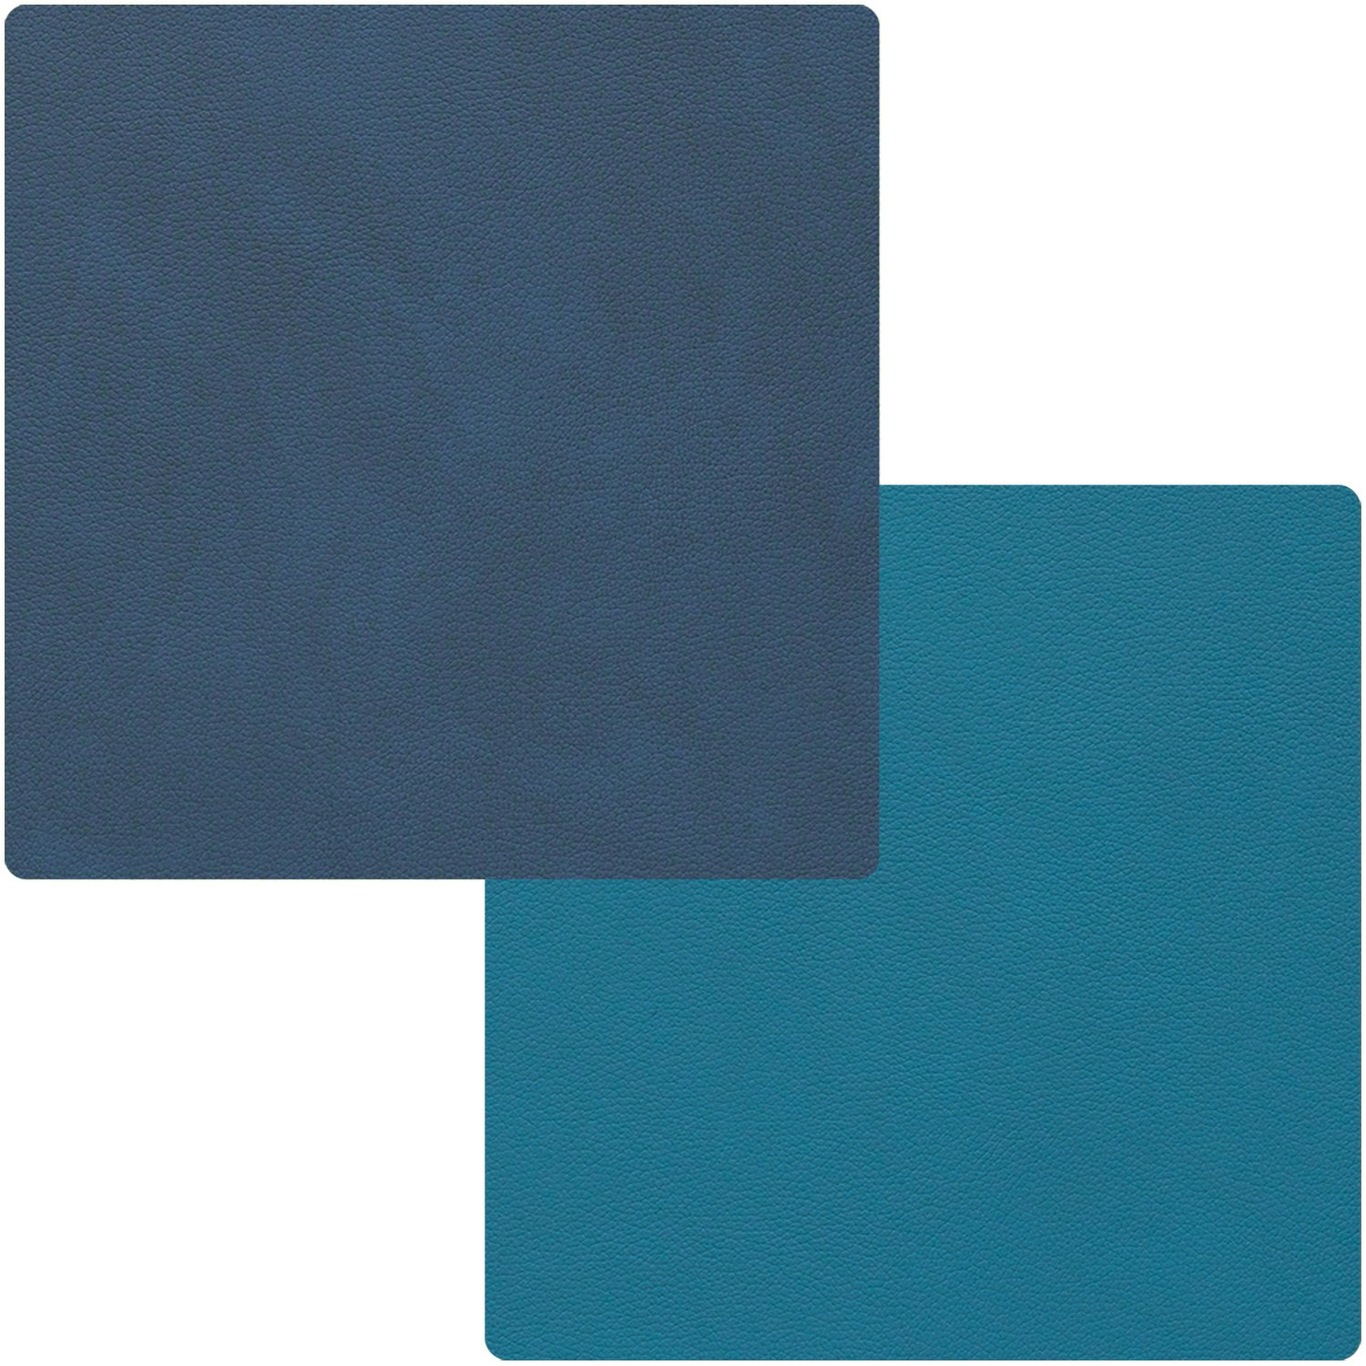 Square Omkeerbare Onderzetter 10x10 cm, Midnight Blue/Petrol